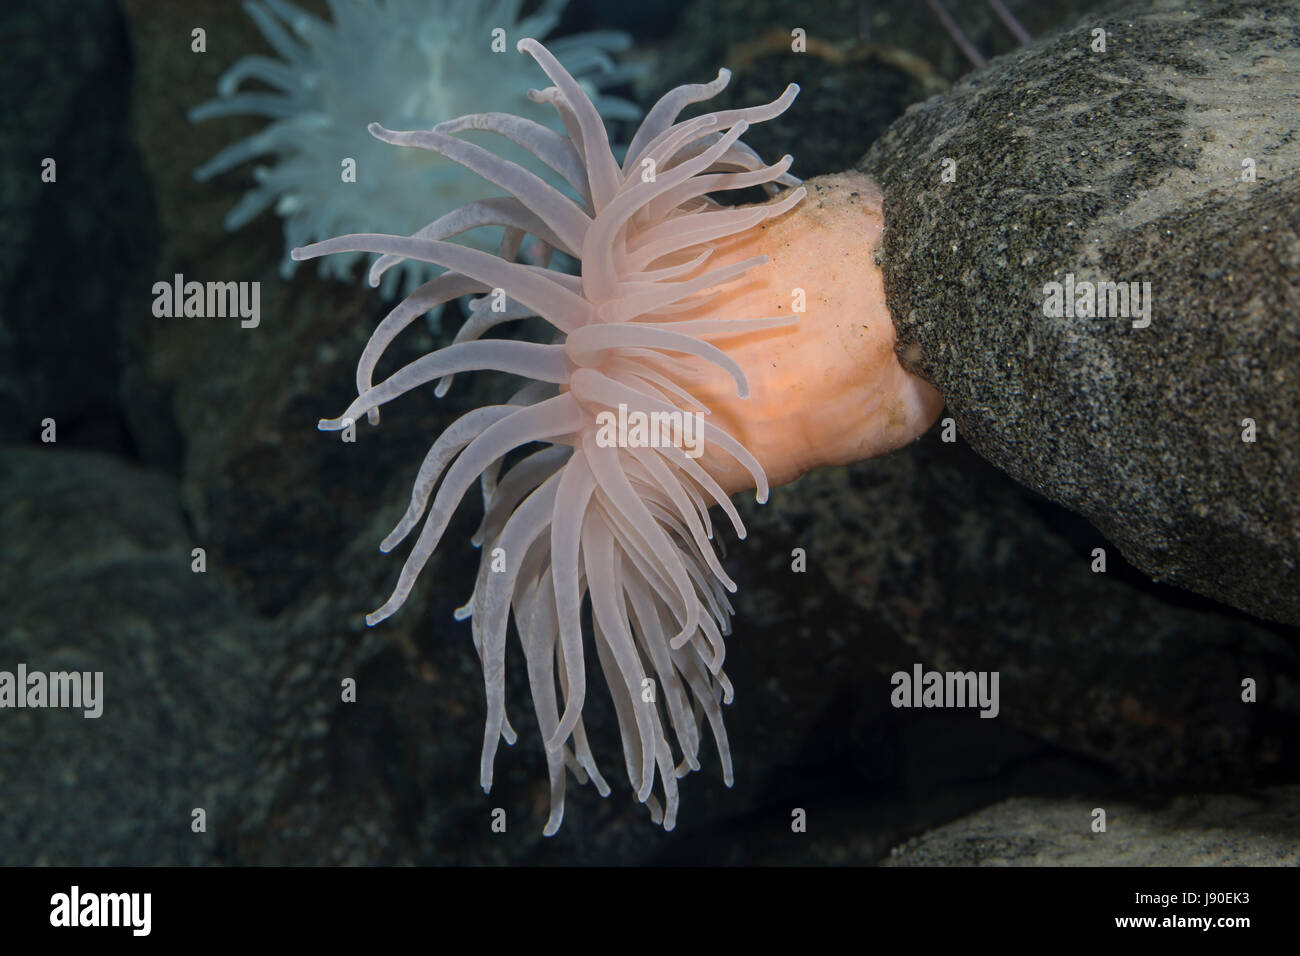 Glatte Seedahlie, Schlammseerose, Schlamm-Seerose, Bolocera tuediae, Deeplet sea anemone, Blumentier, Blumentiere, Anthozoa, anemones, sea anemones Stock Photo